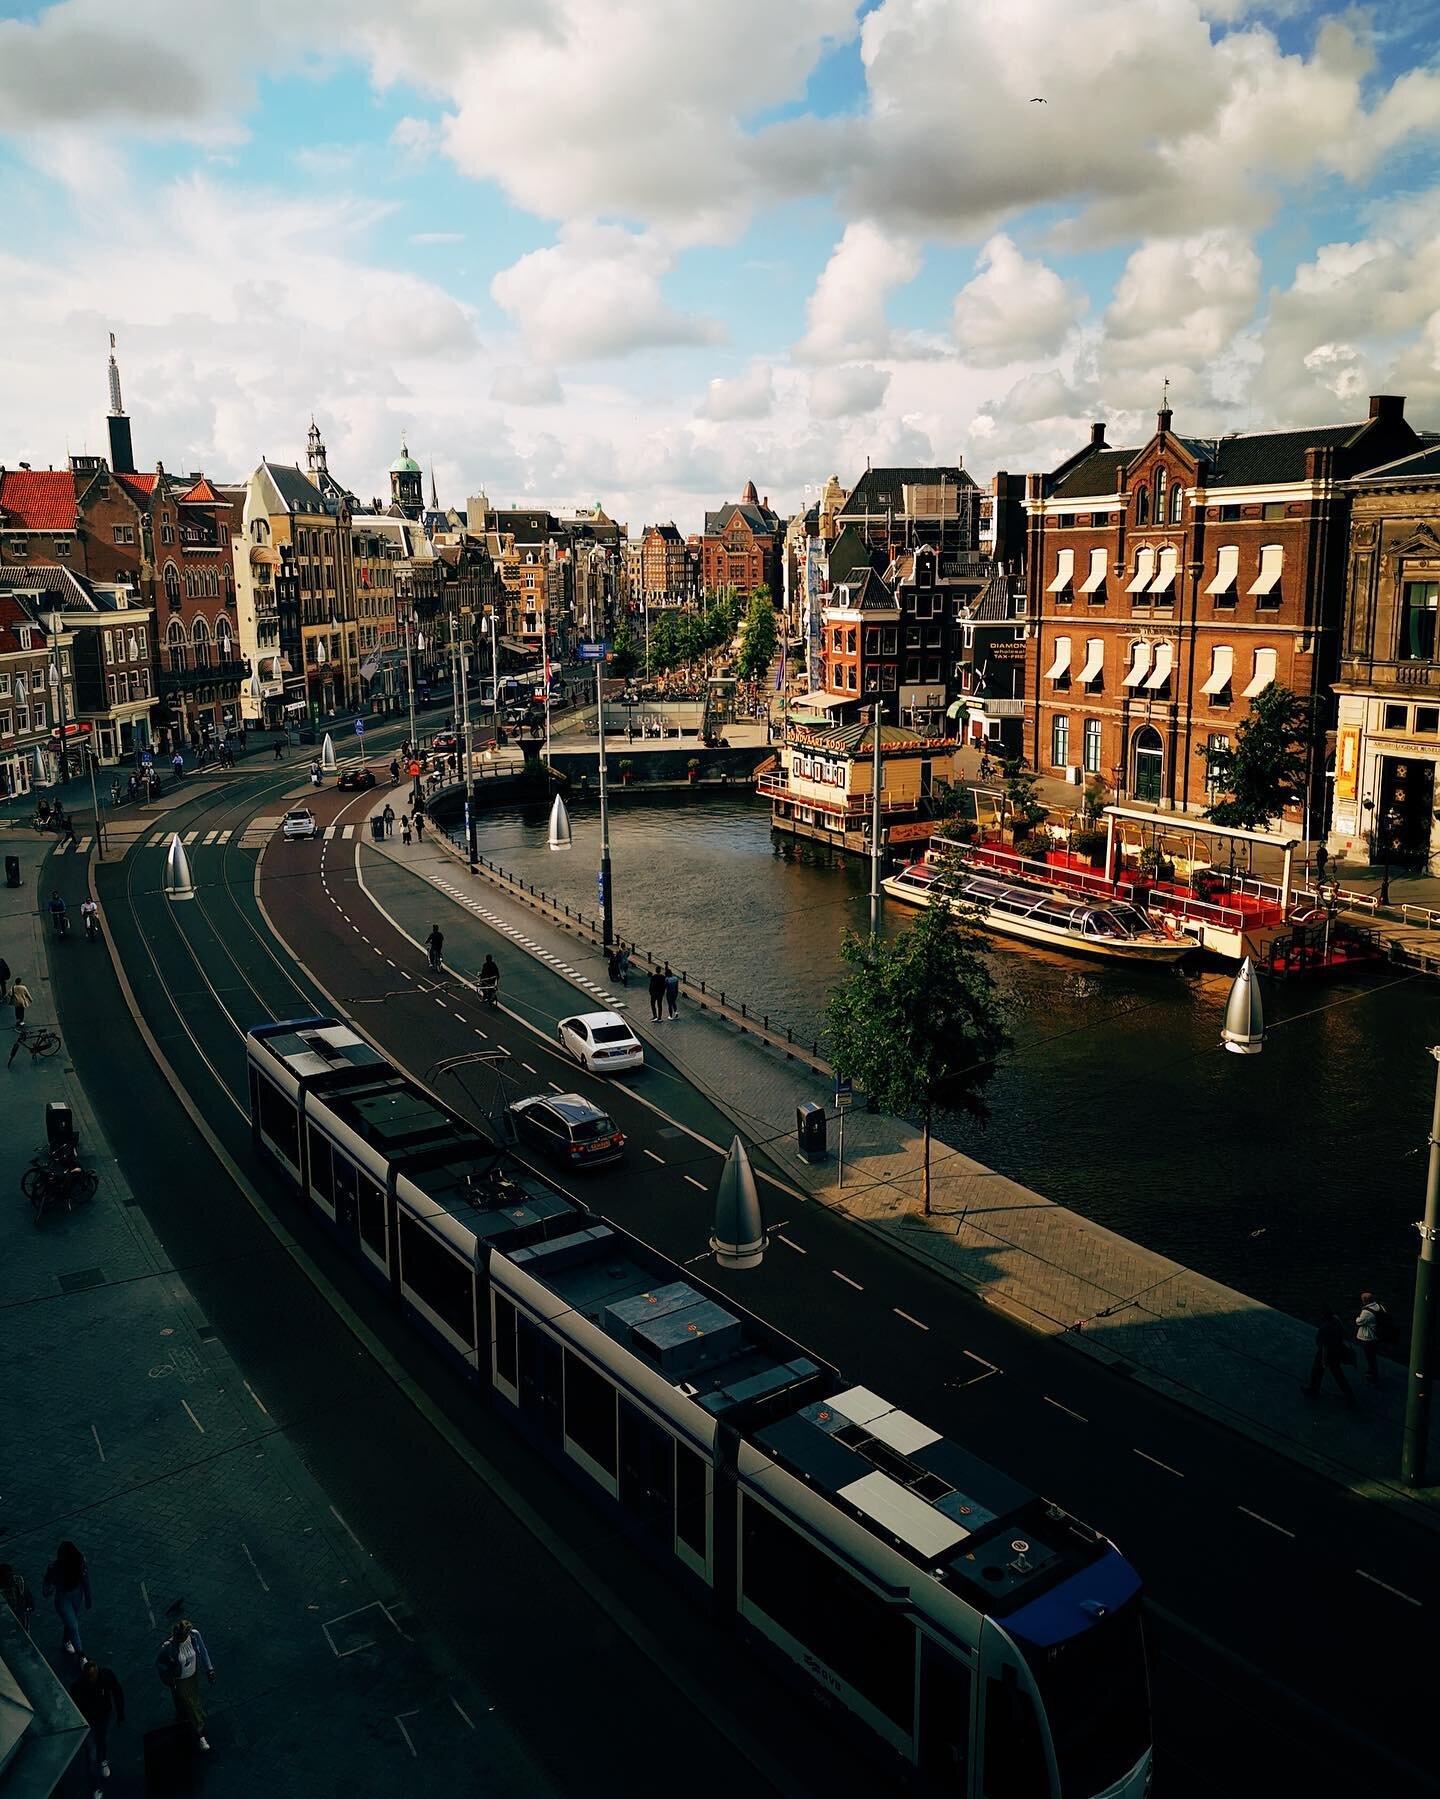 Rooftops on the Rokin, Amsterdam.
.
.
#iloveamsterdam #amsterdam #rokin #nederland #streetphotography #streetstyle #cities #people #travel #iamsterdam #amsterdamworld #nikon #amsterdamphotographer #europe #canalsofamsterdam #amsterdamcity #amsterdamc